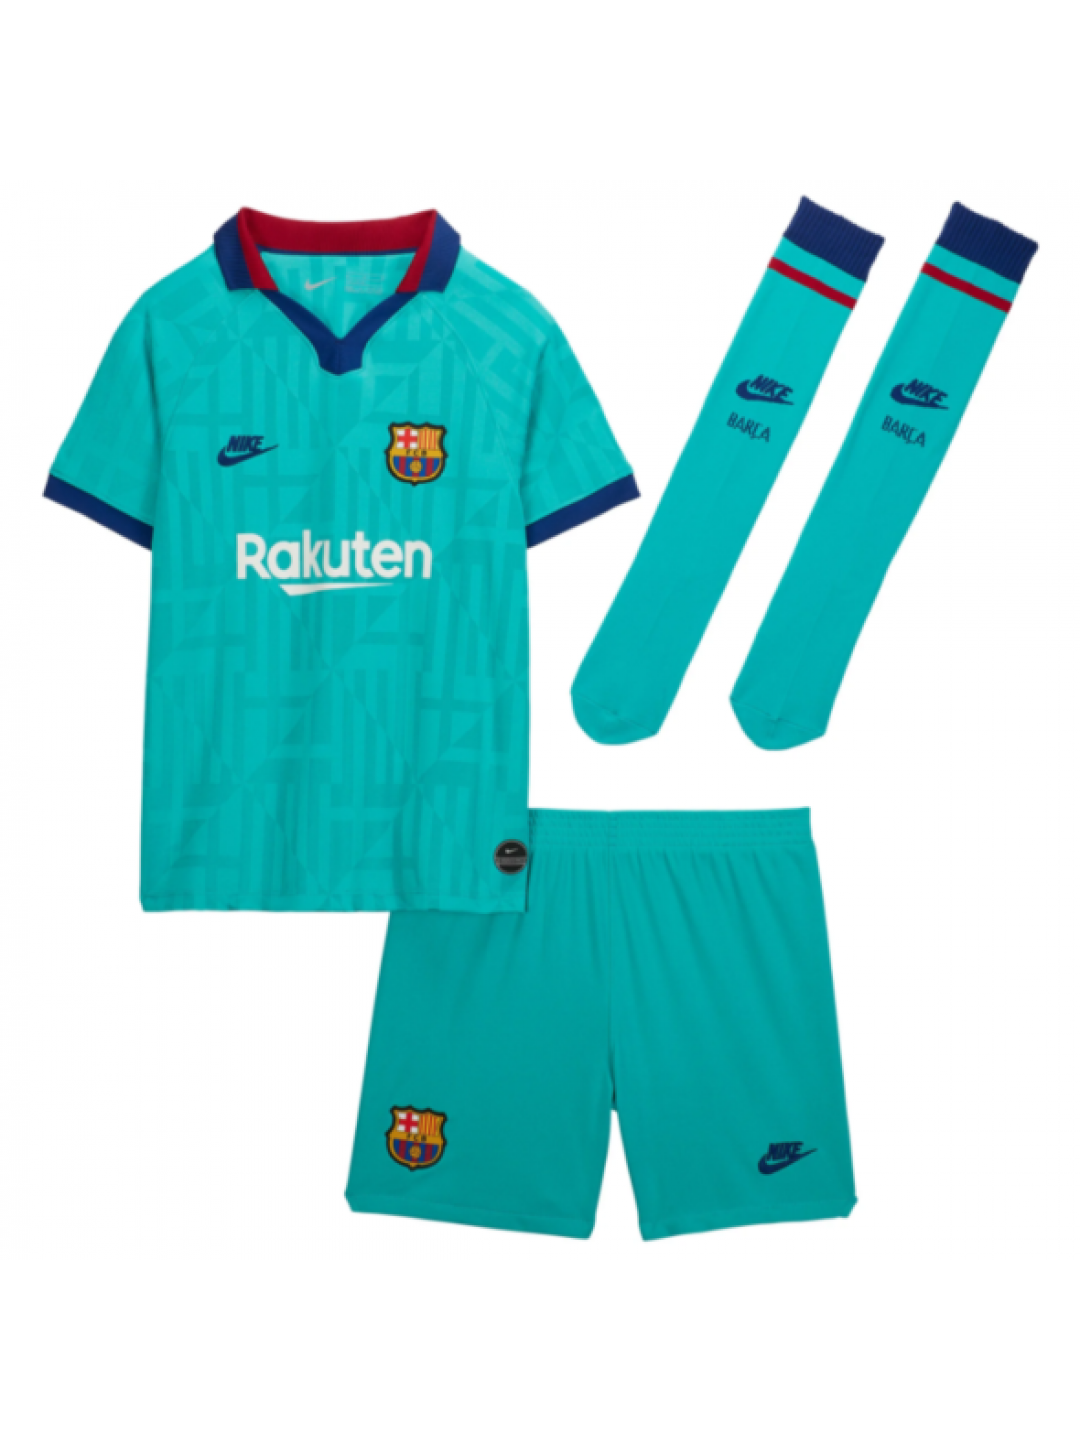 Comprar Camiseta Barcelona Tercera Equipación 2019/2020 Baratas